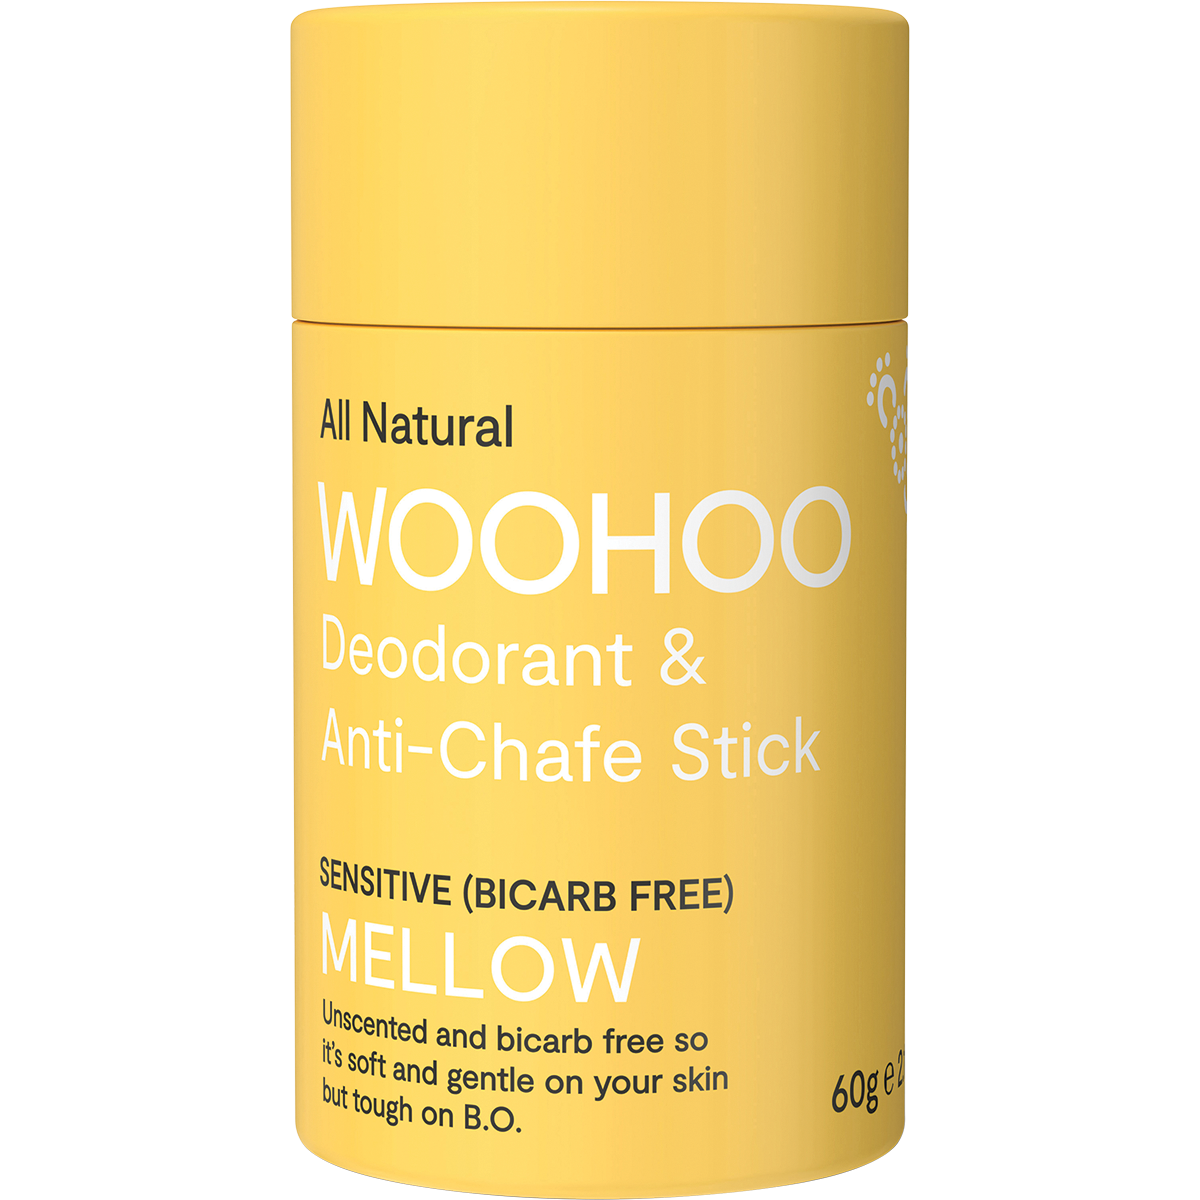 Woohoo Natural Deodorant & Anti-Chafe Stick Mellow (Sensitive) 60g